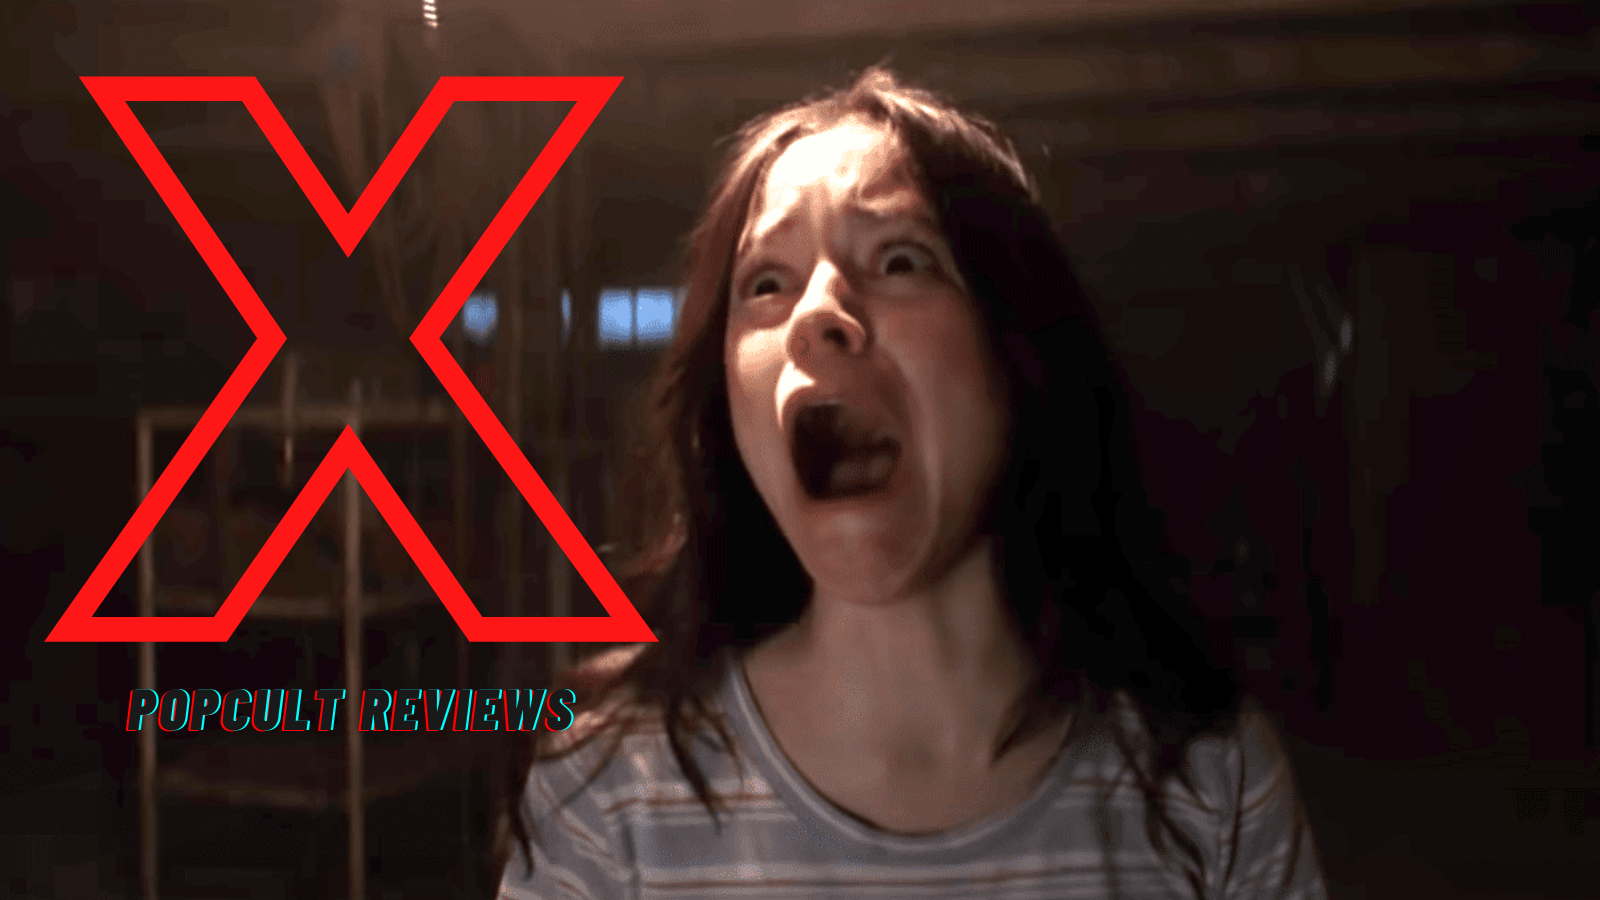 x movie review reddit